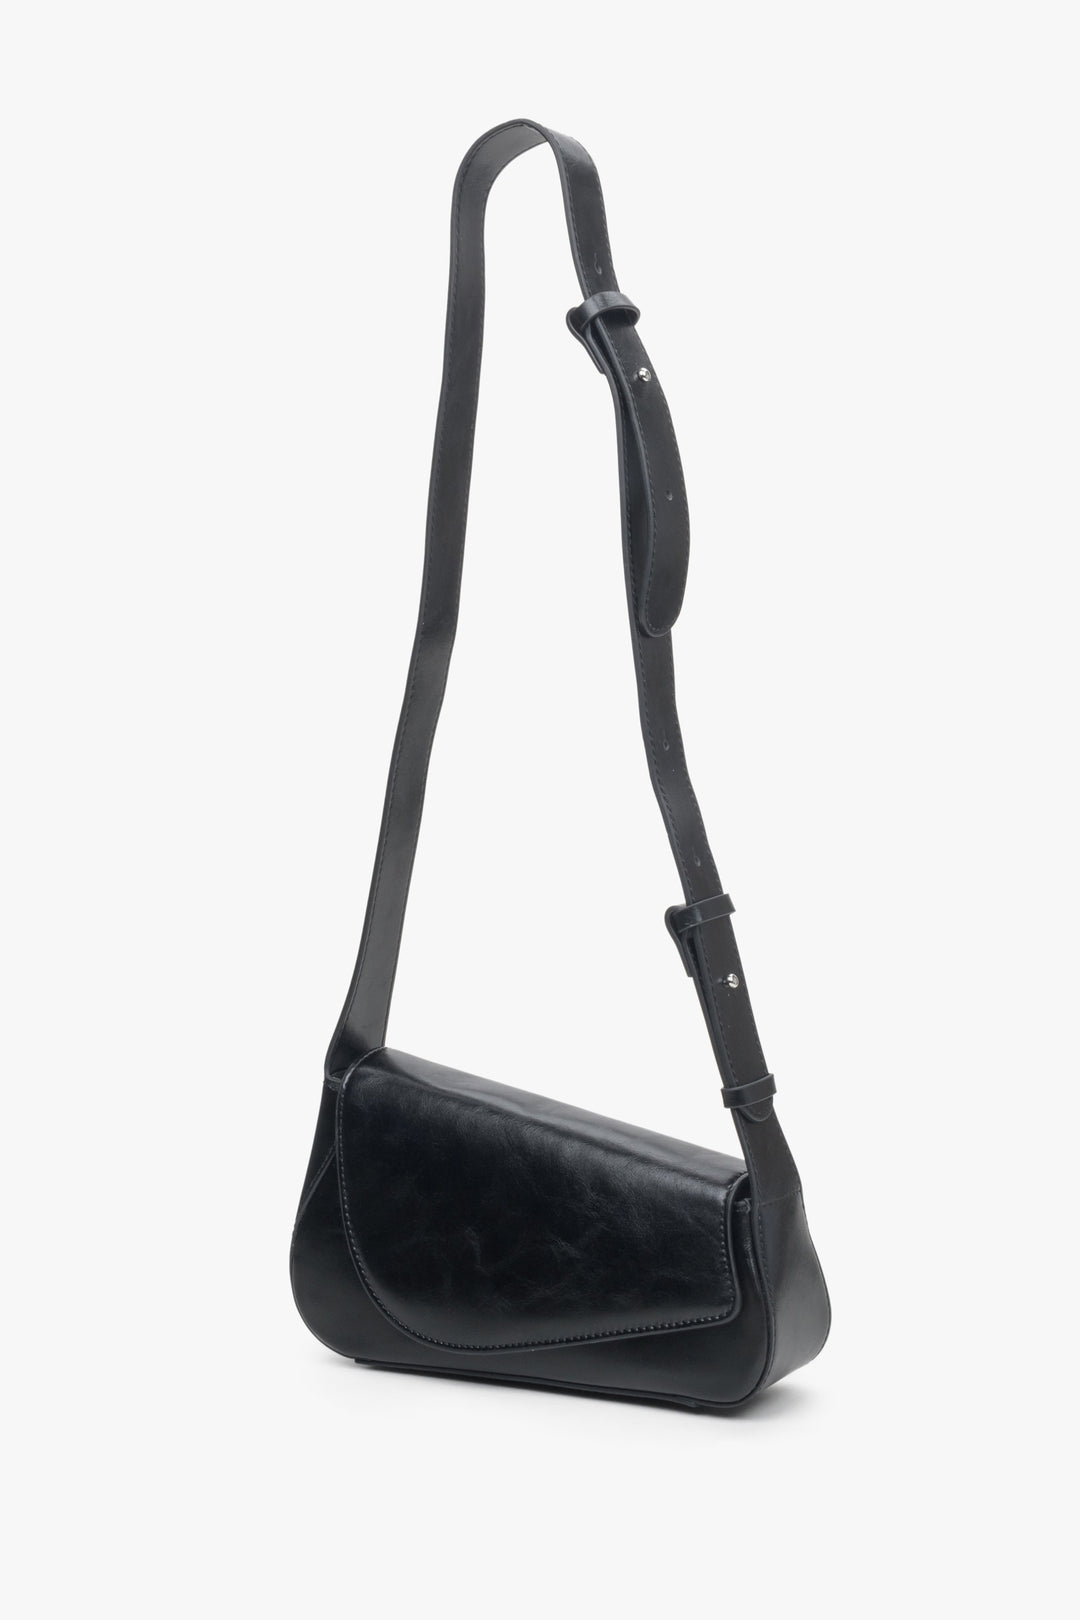 Estro's women's black baguette bag made of genuine leather.